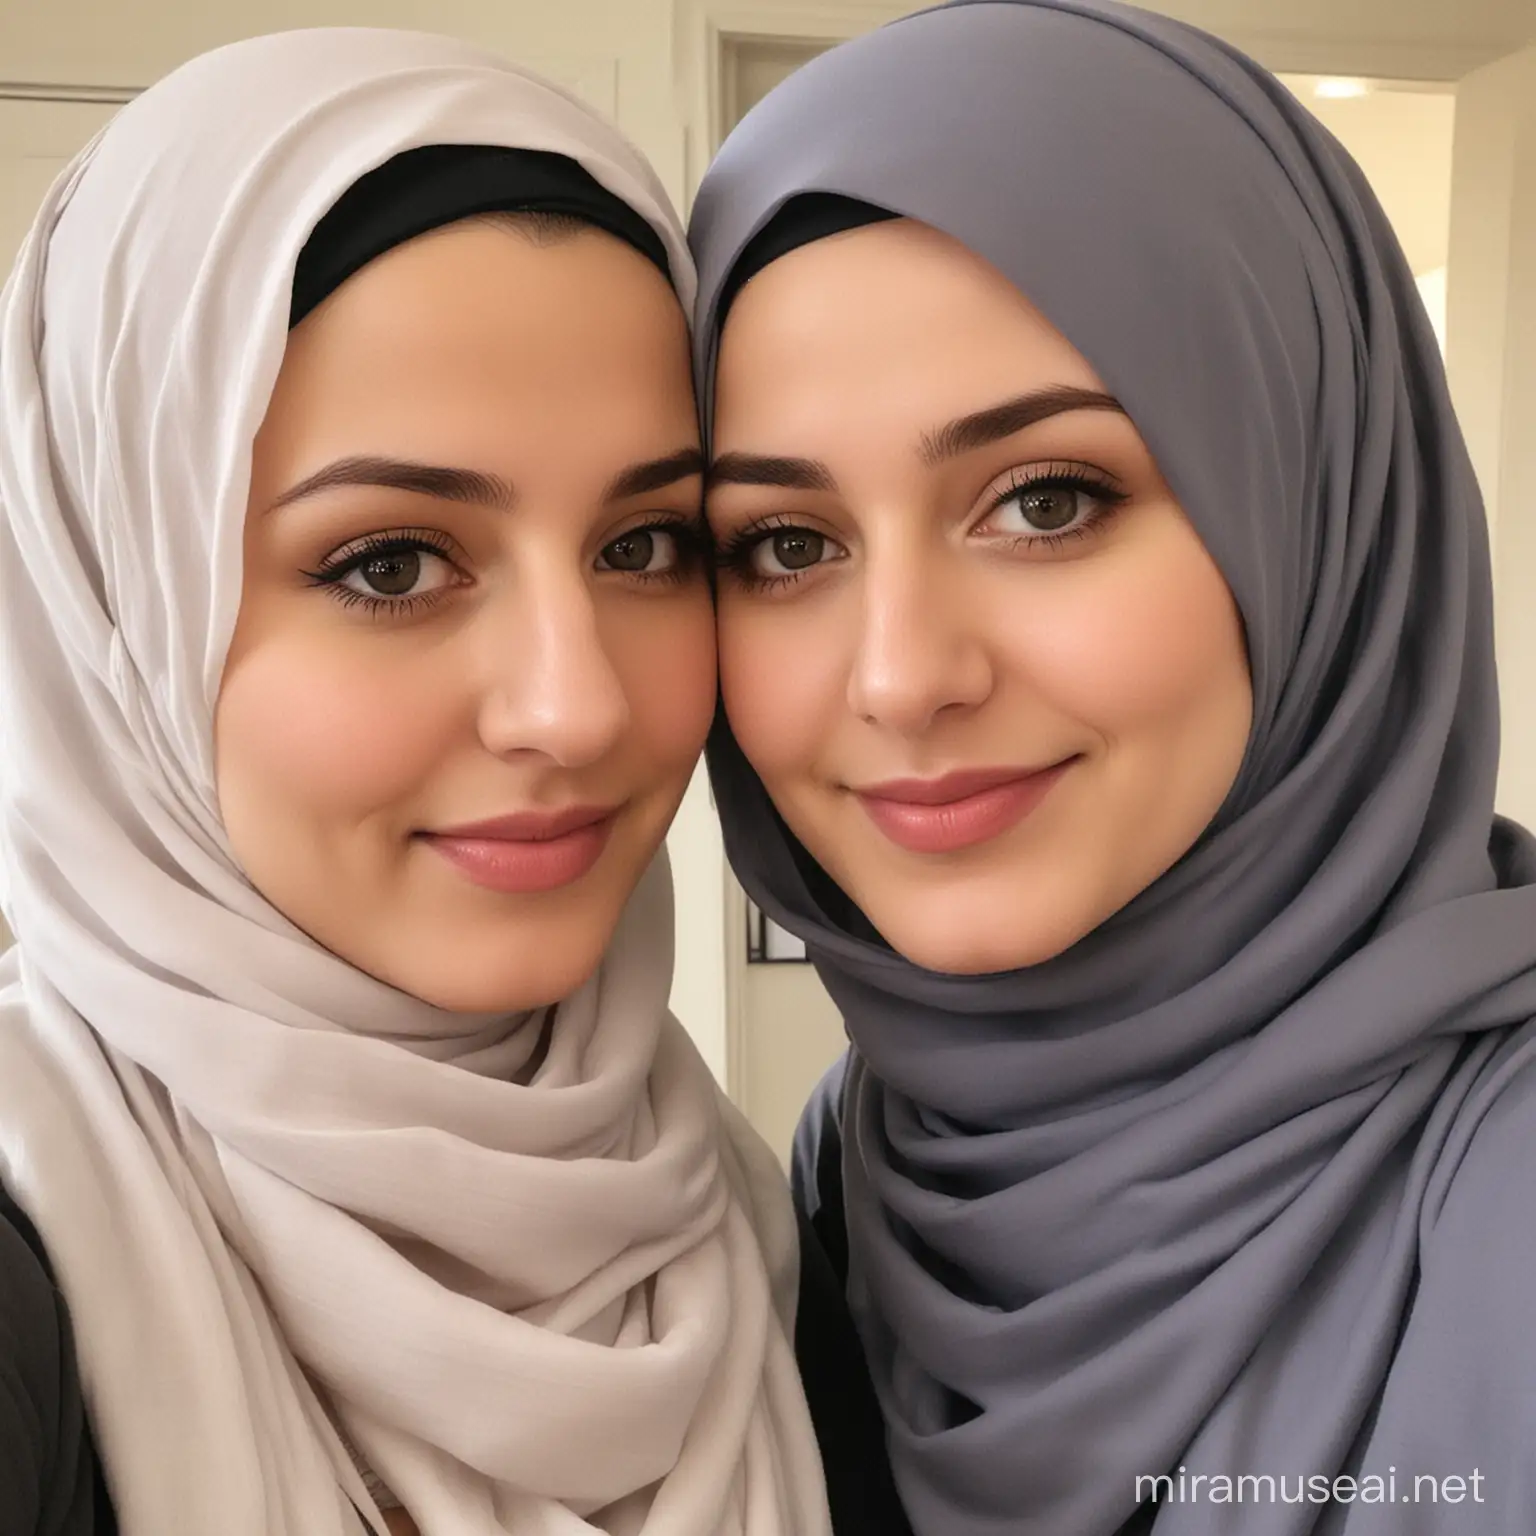 2 Girl Hijabi Irani is White Lesbian Natural Language Processing